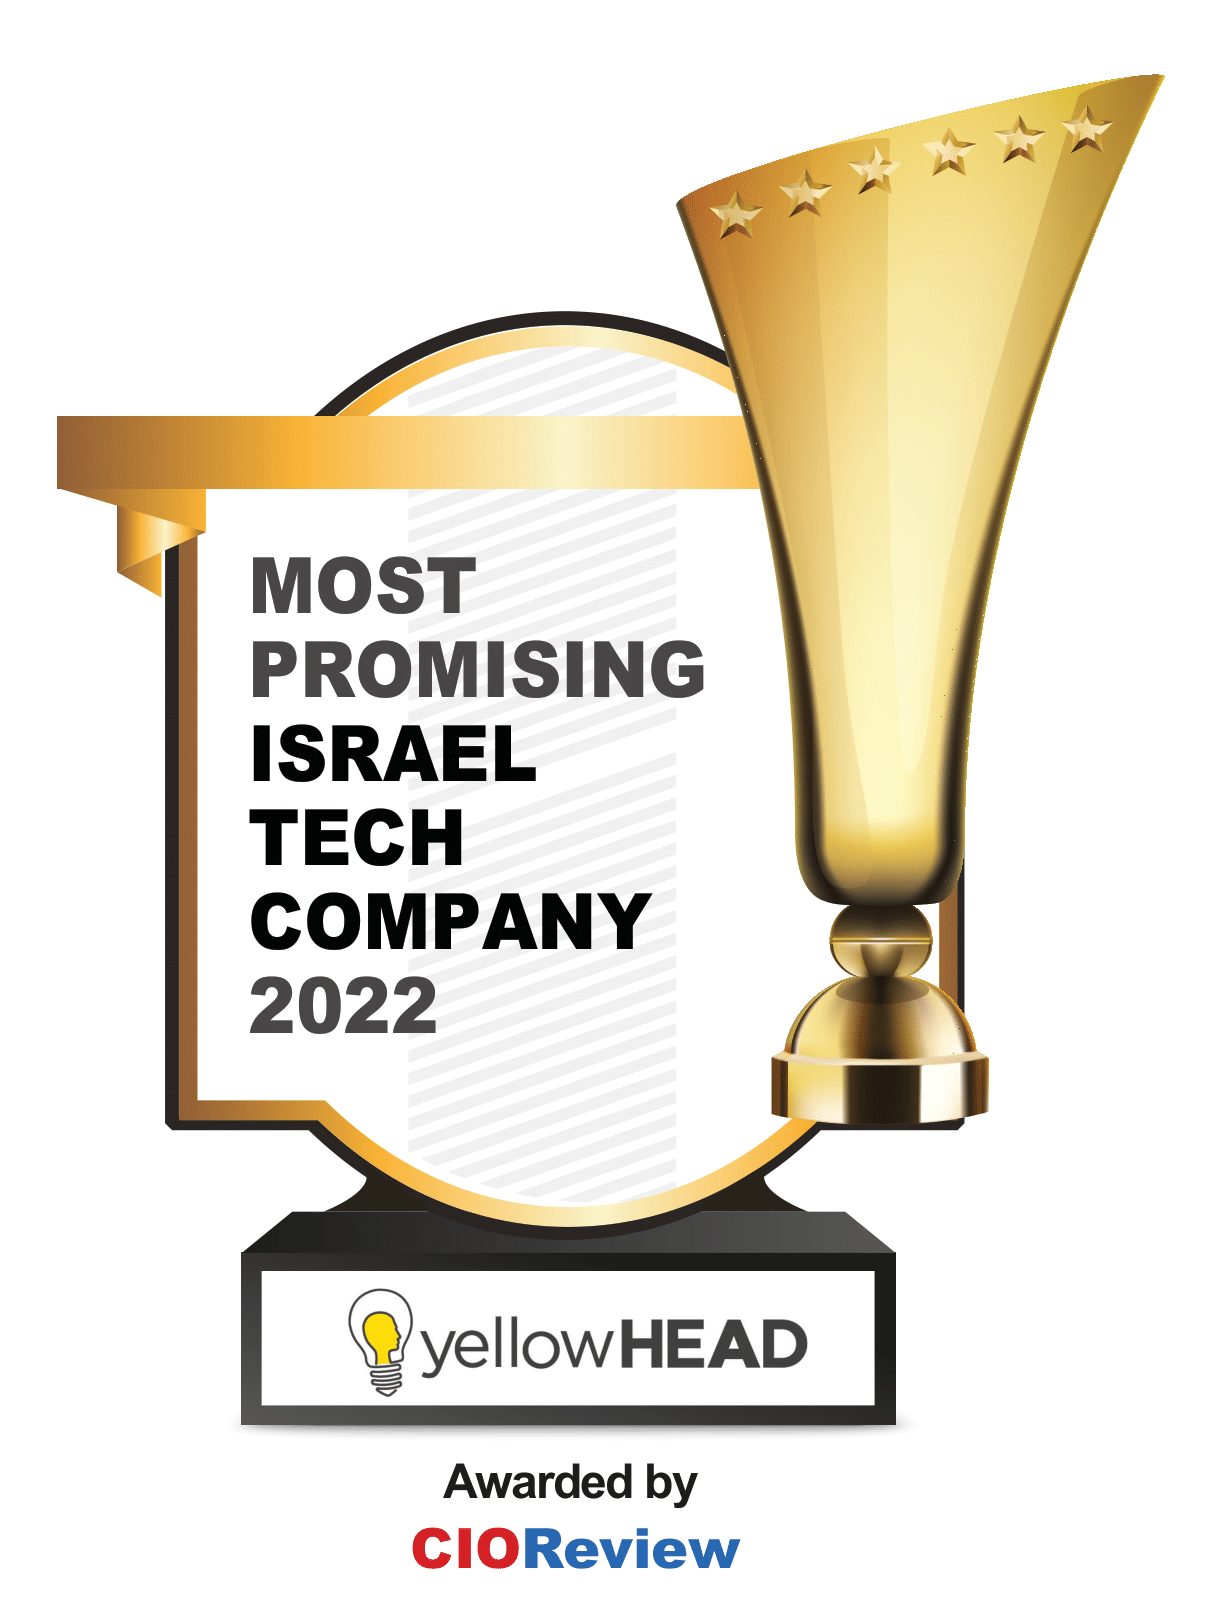 CIO – Most promising Israel tech company 2022